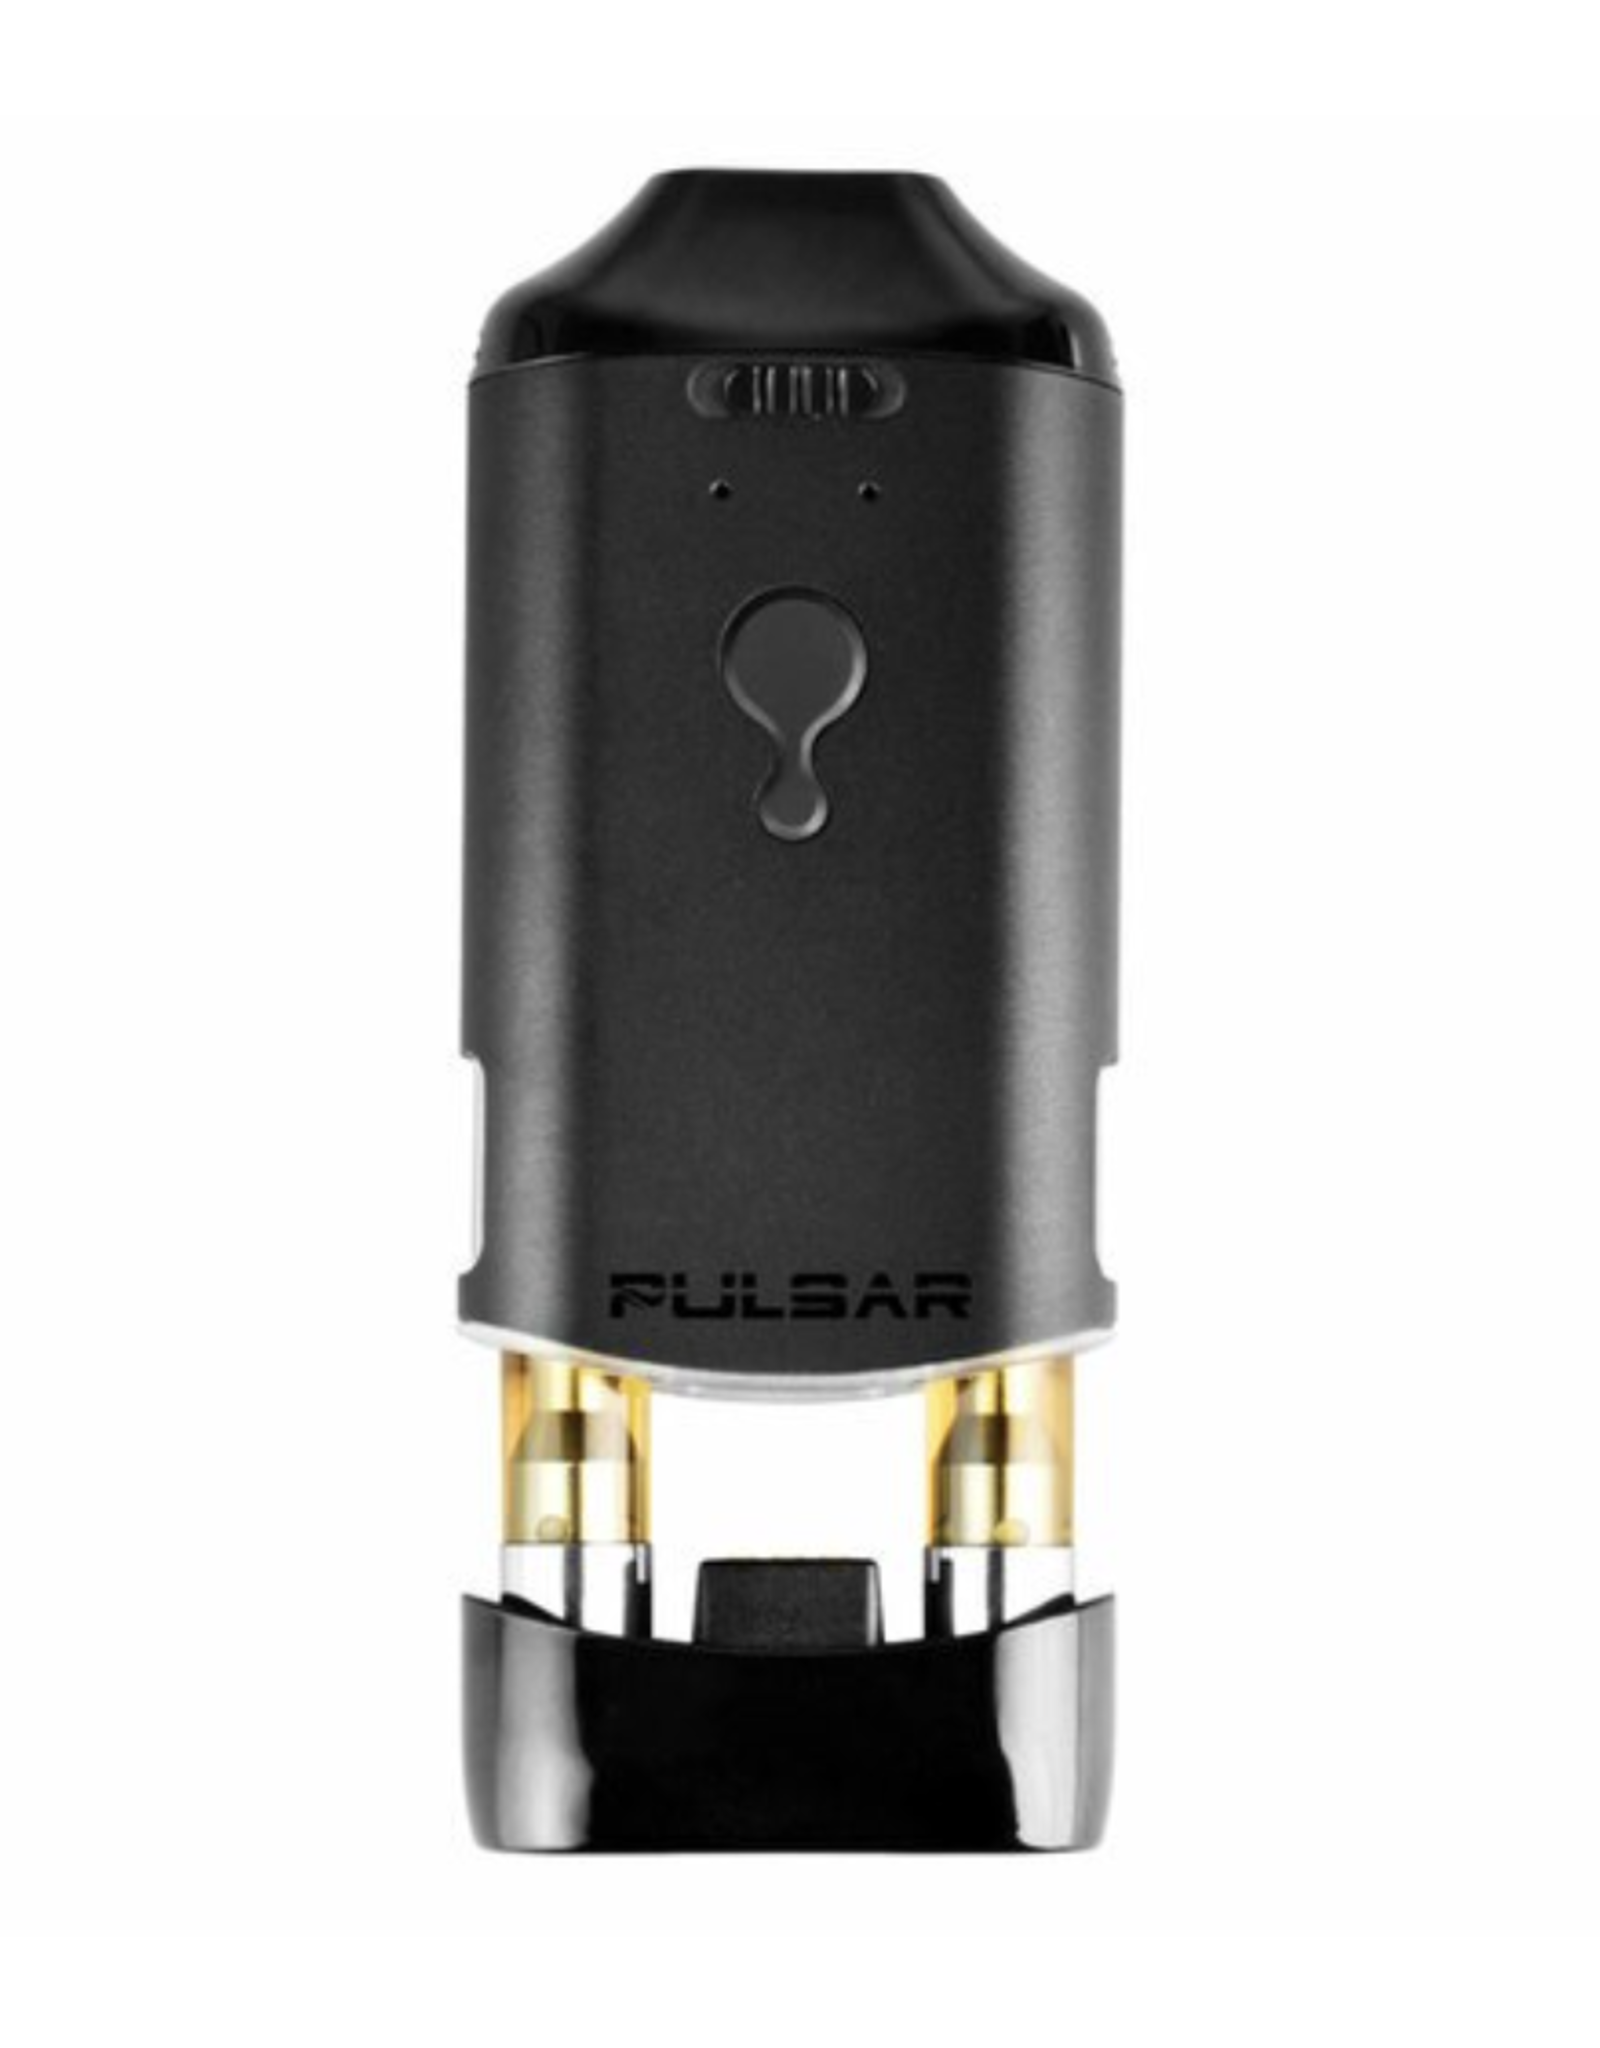 Pulsar Pulsar DuploCart Thick Oil Vaporizer